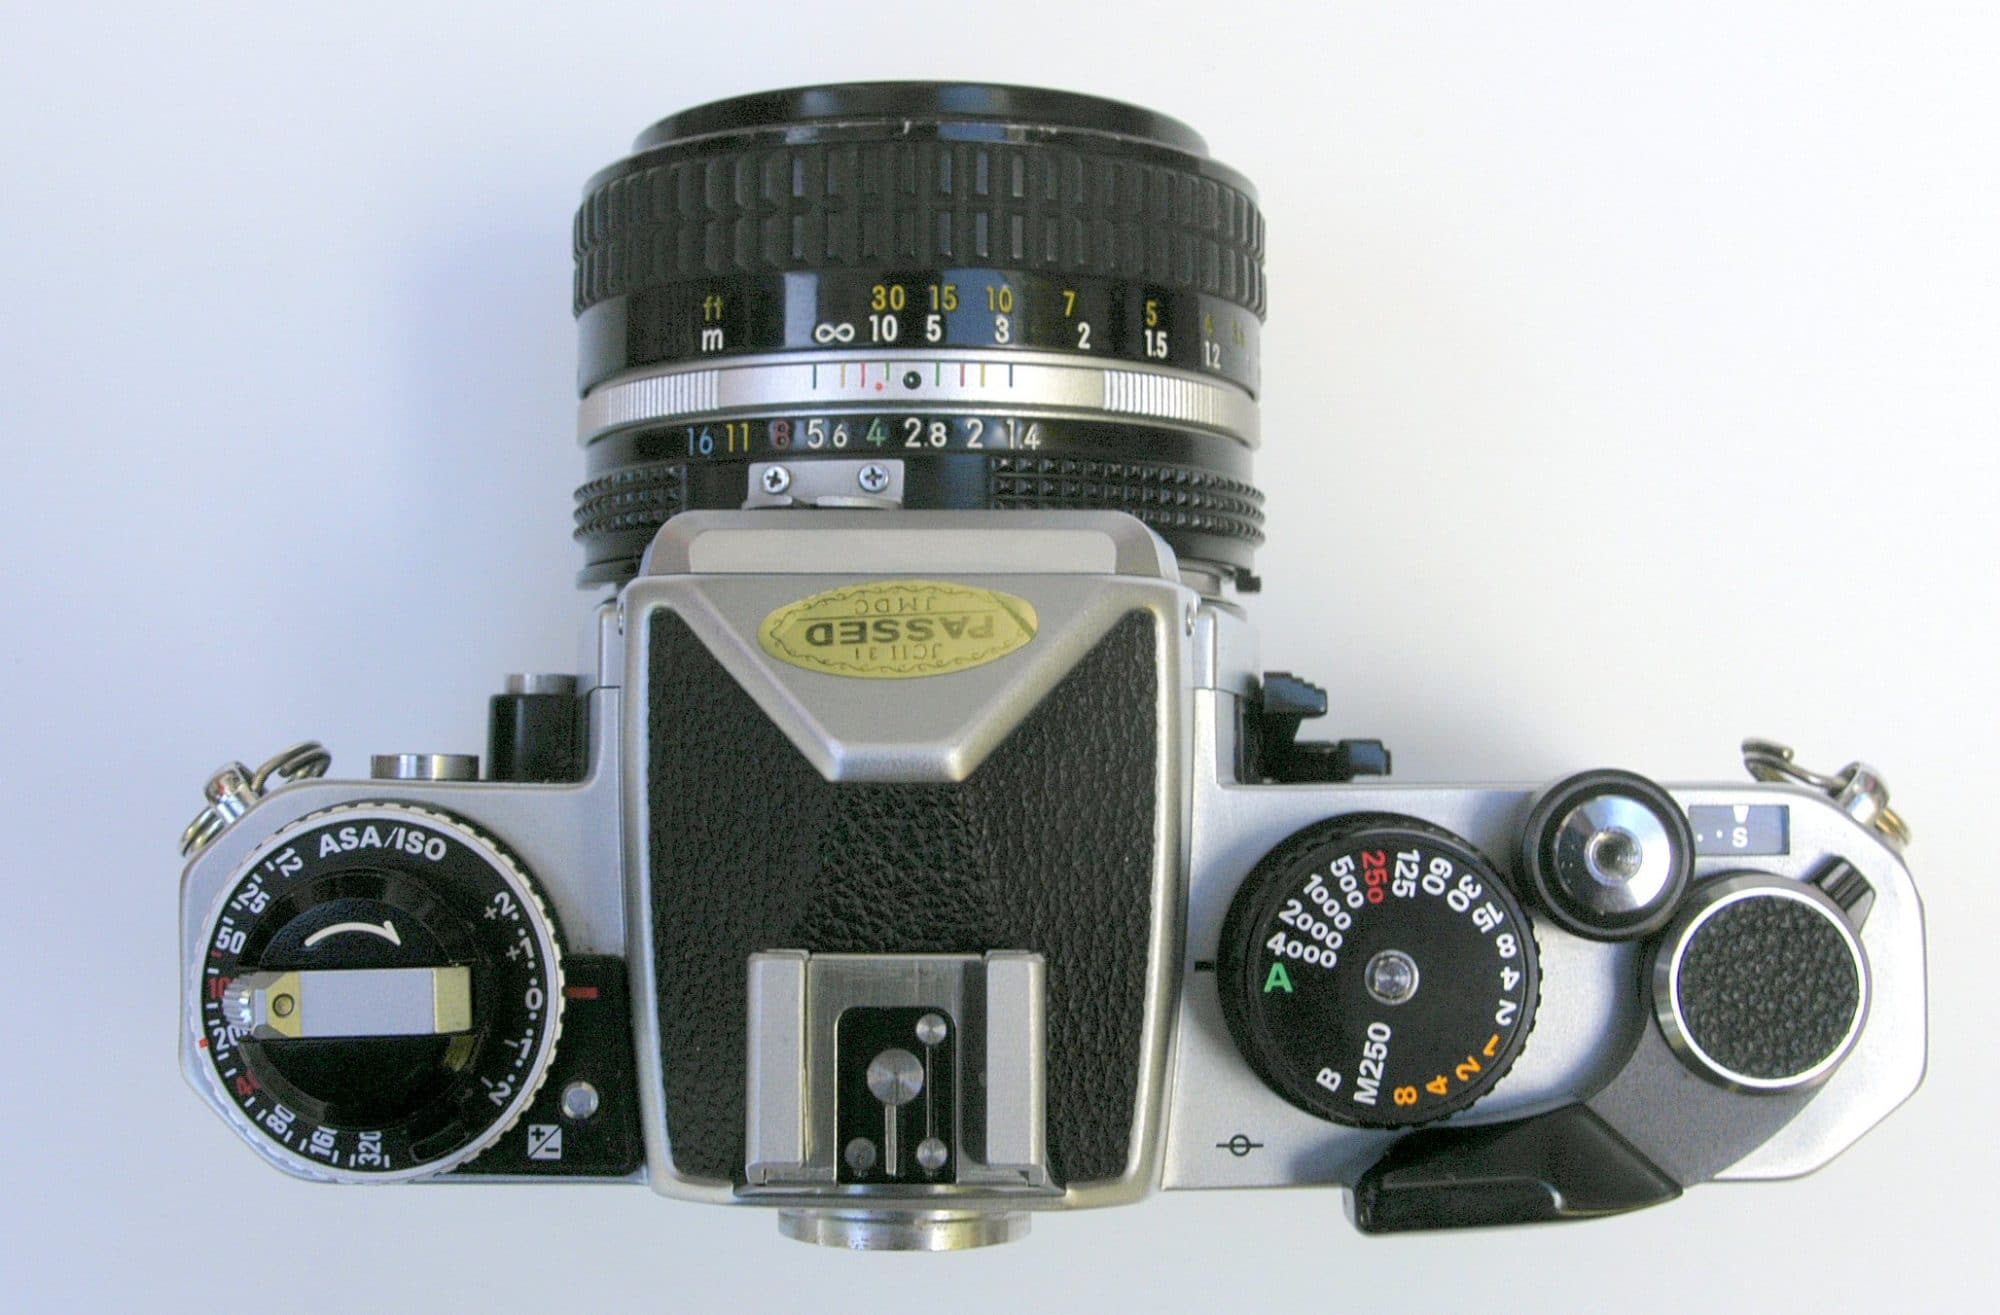 Nikon FE2 フィルムカメラ カメラ 家電・スマホ・カメラ 販売販促 